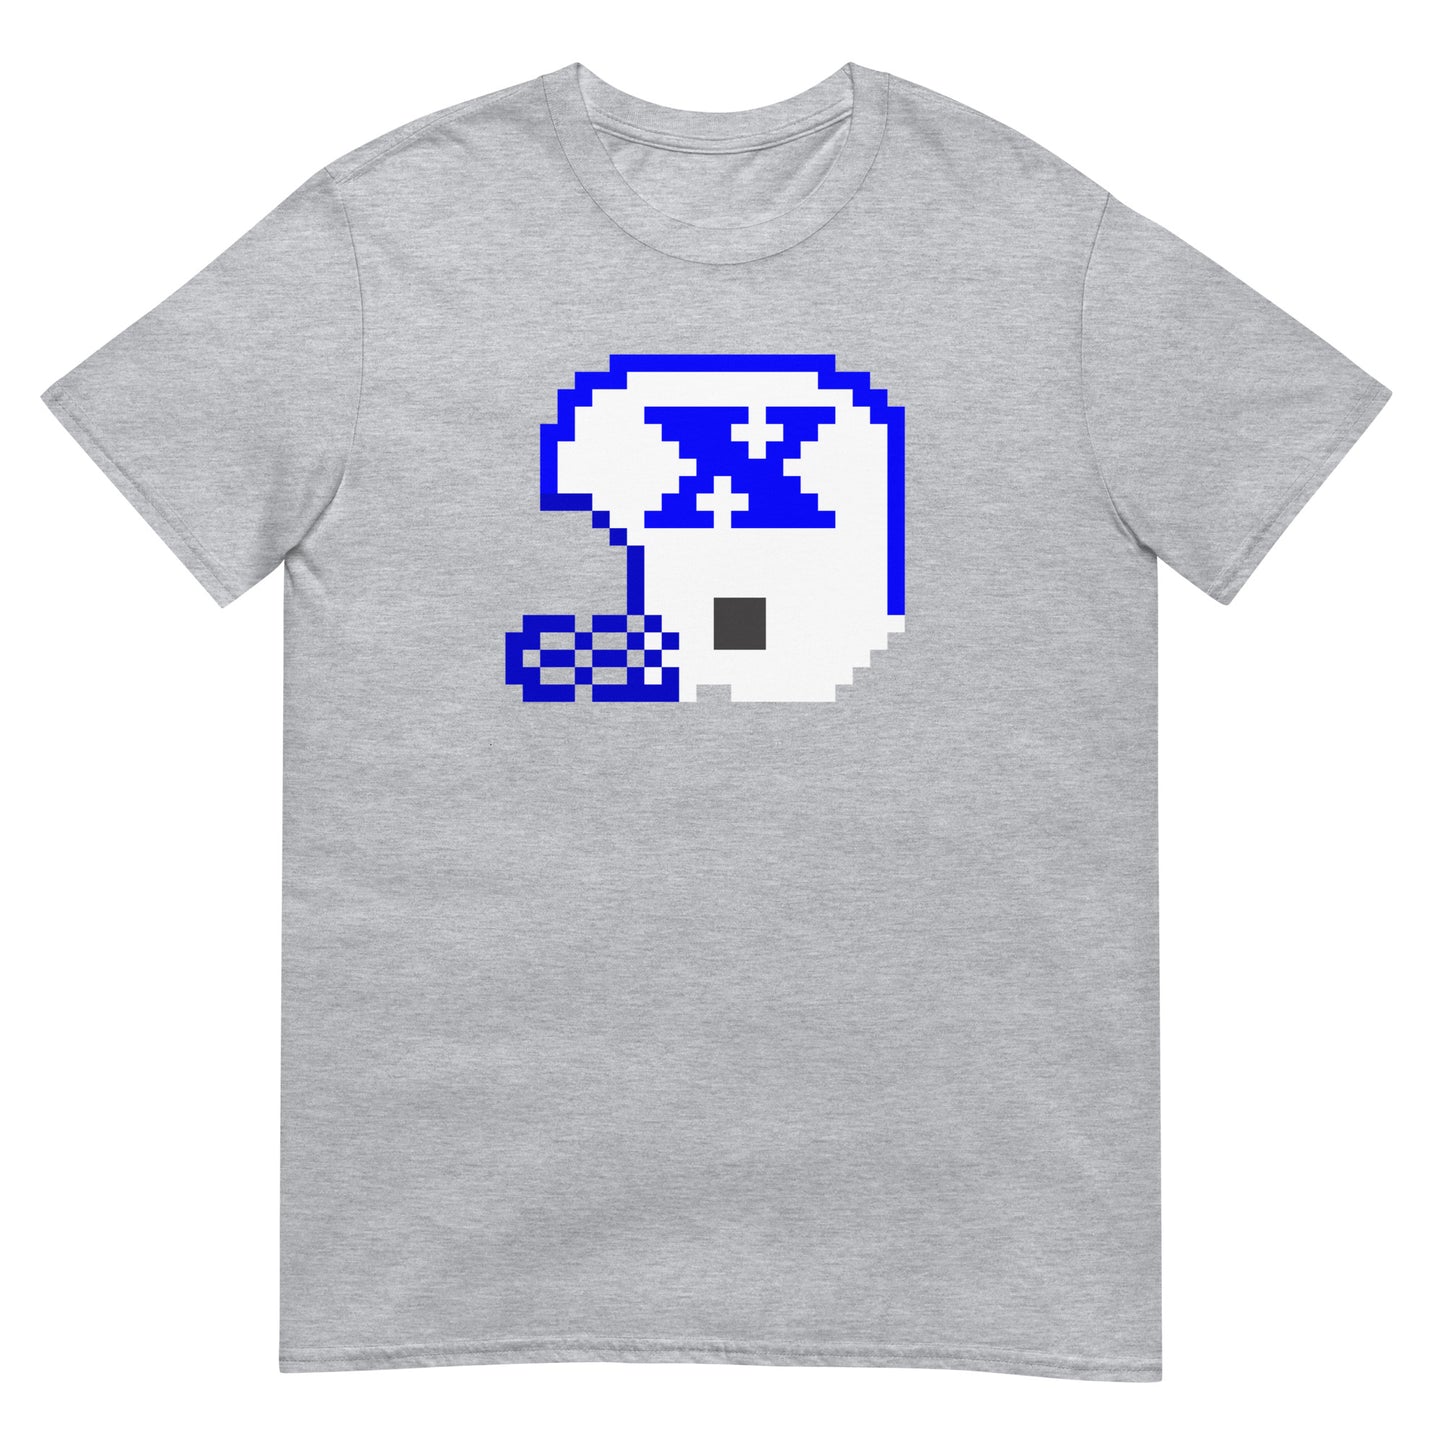 Cincinnati St. Xavier Bombers Short-Sleeve Unisex T-Shirt